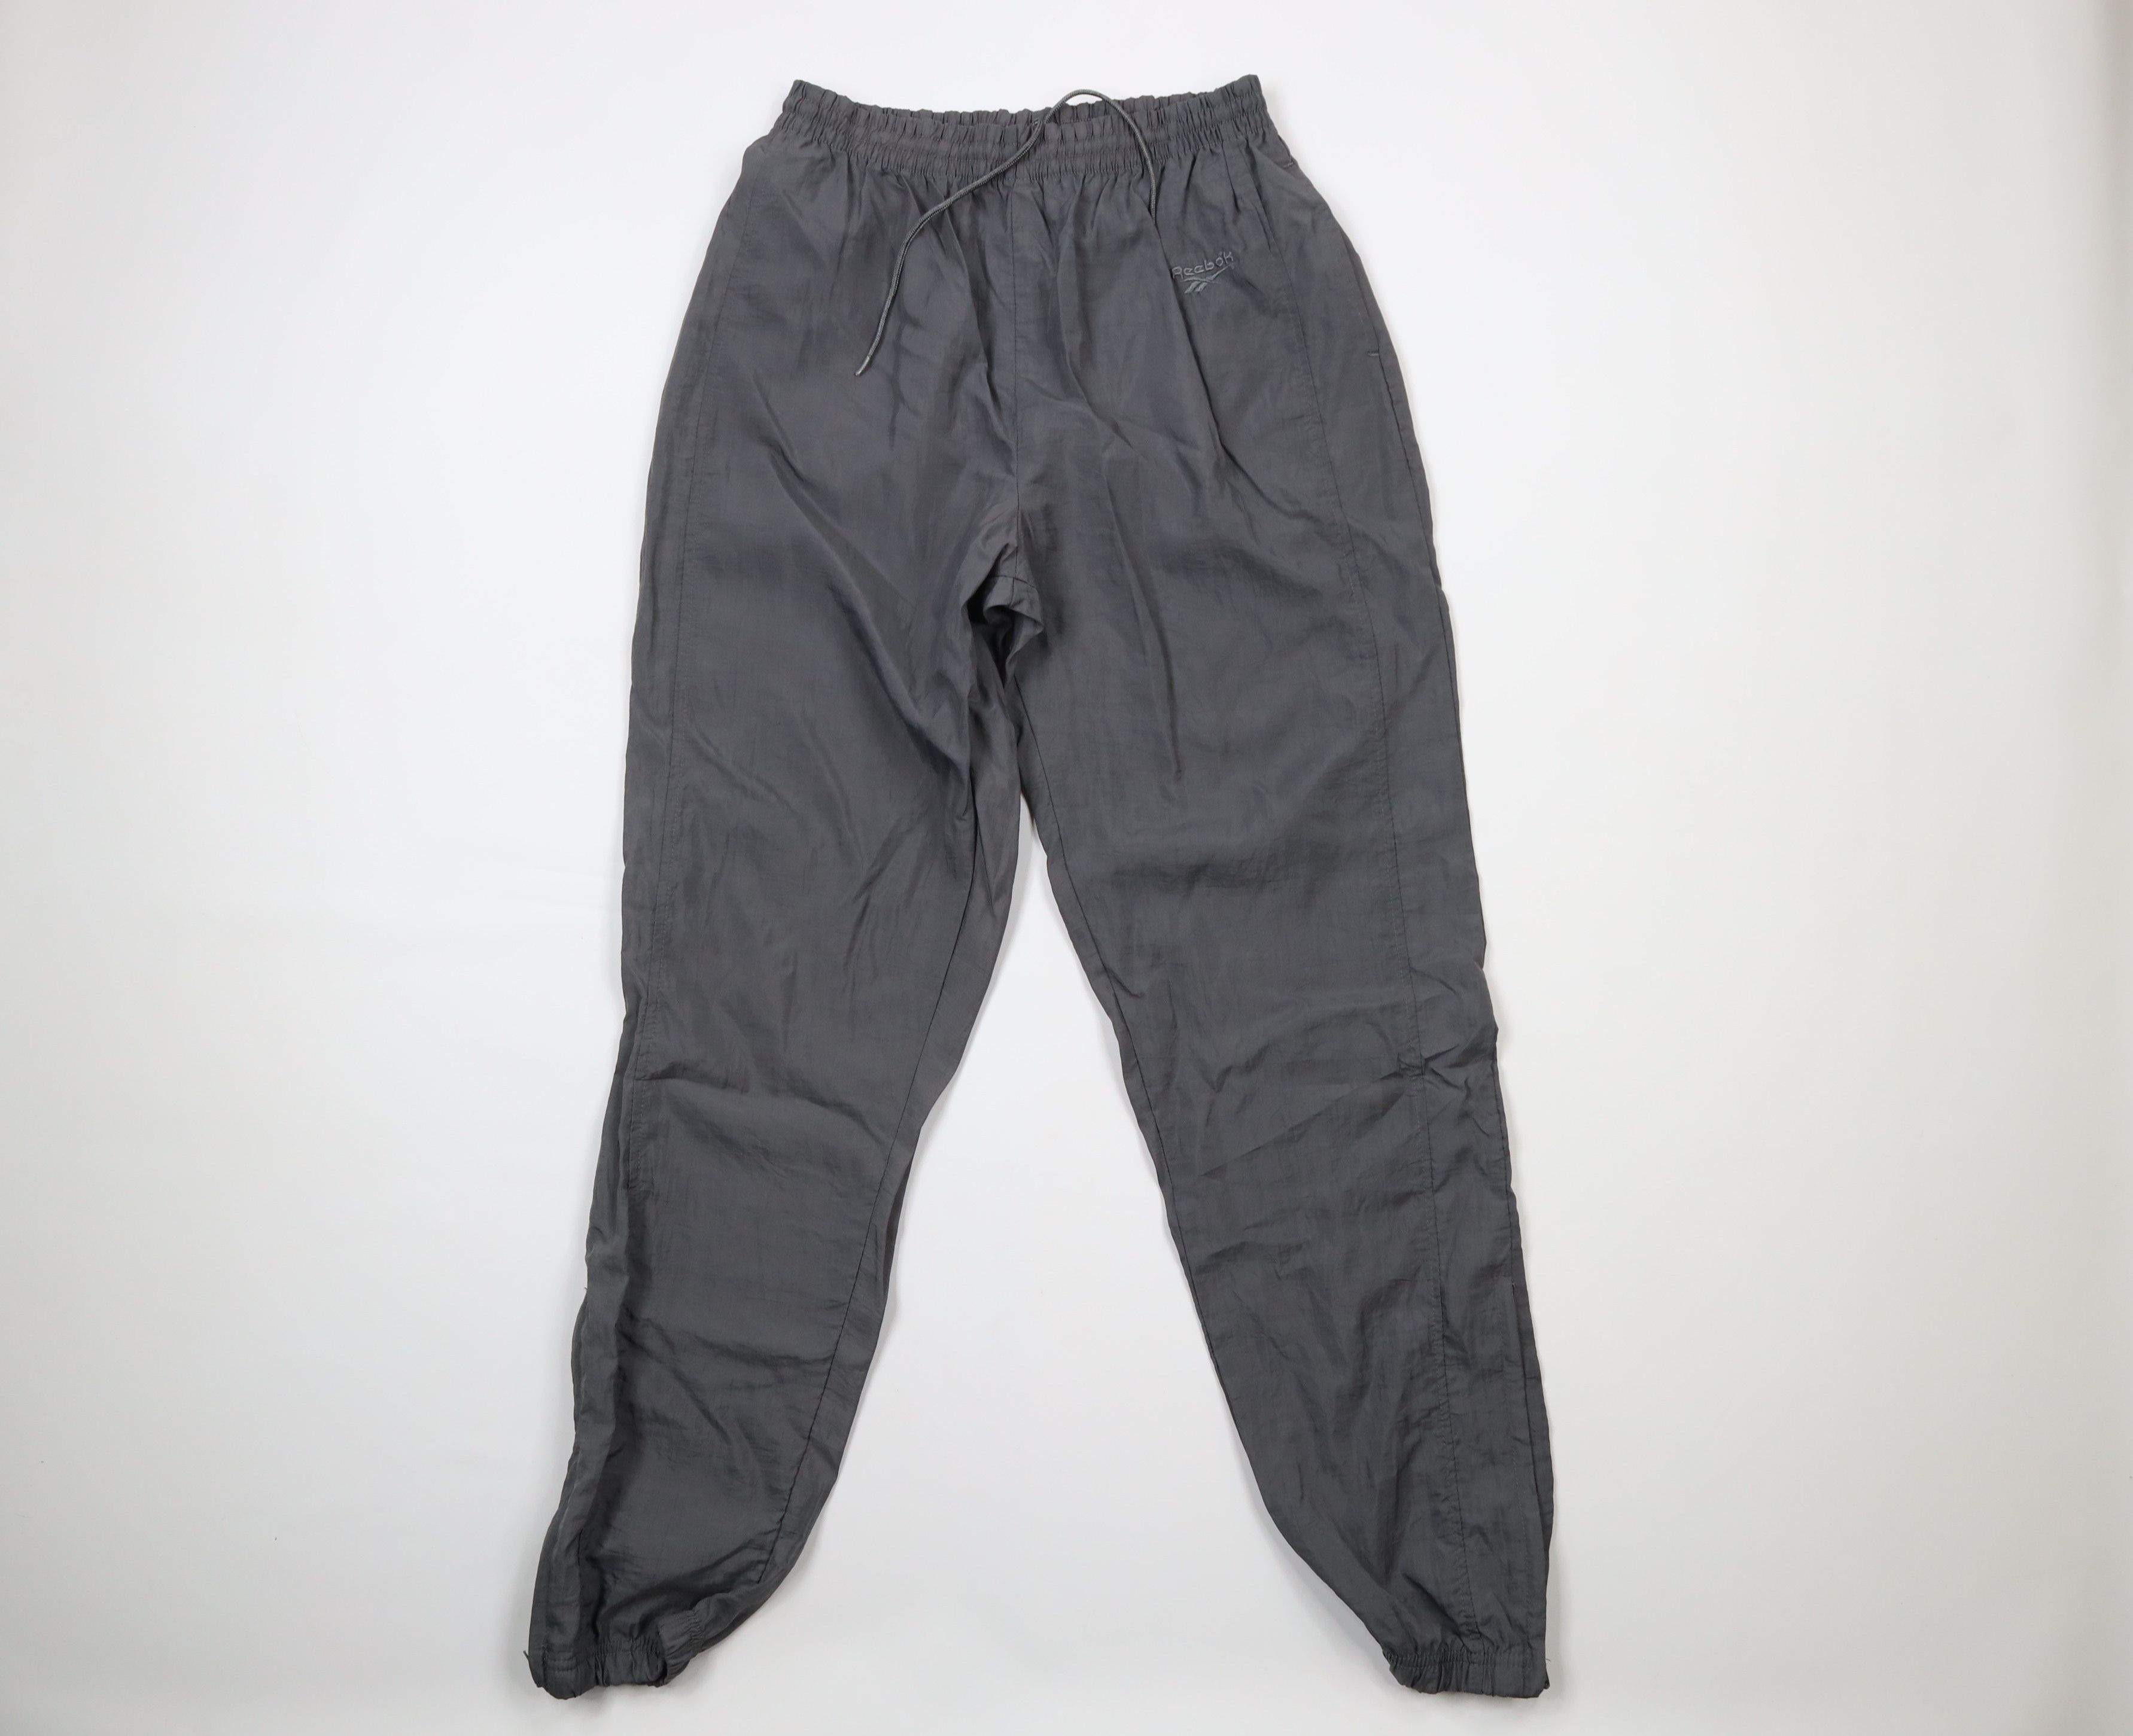 Vintage Vintage 90s Reebok Cuffed Nylon Joggers Jogger Pants Gray Size US 34 / EU 50 - 1 Preview